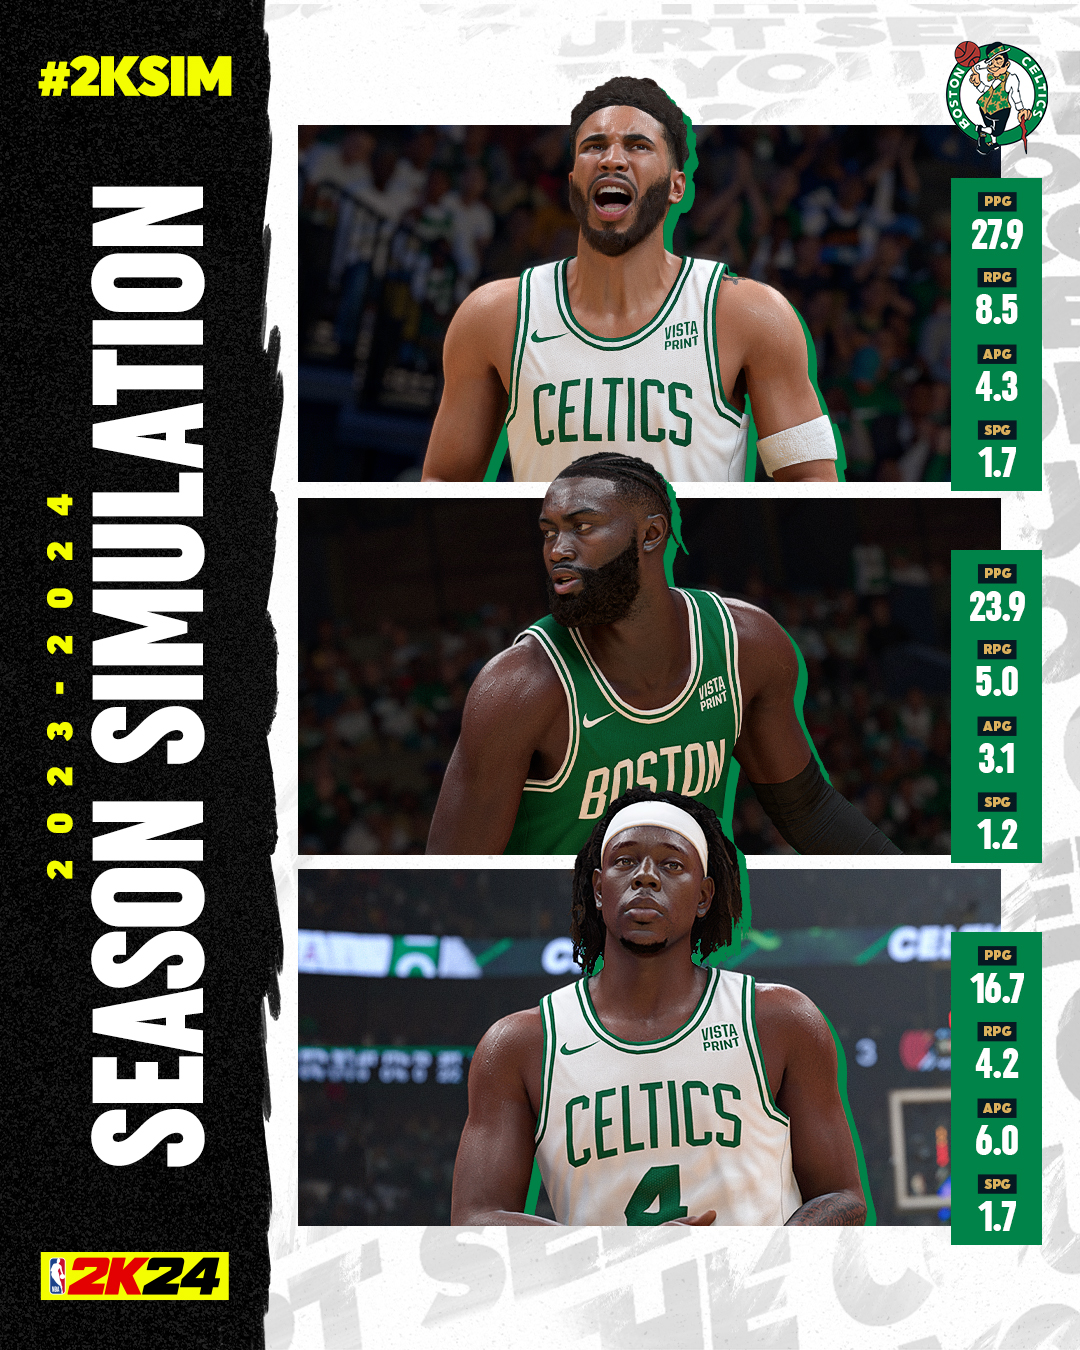 Trio of Celtics have new NBA 2K ratings to tease Nov. Next Gen release